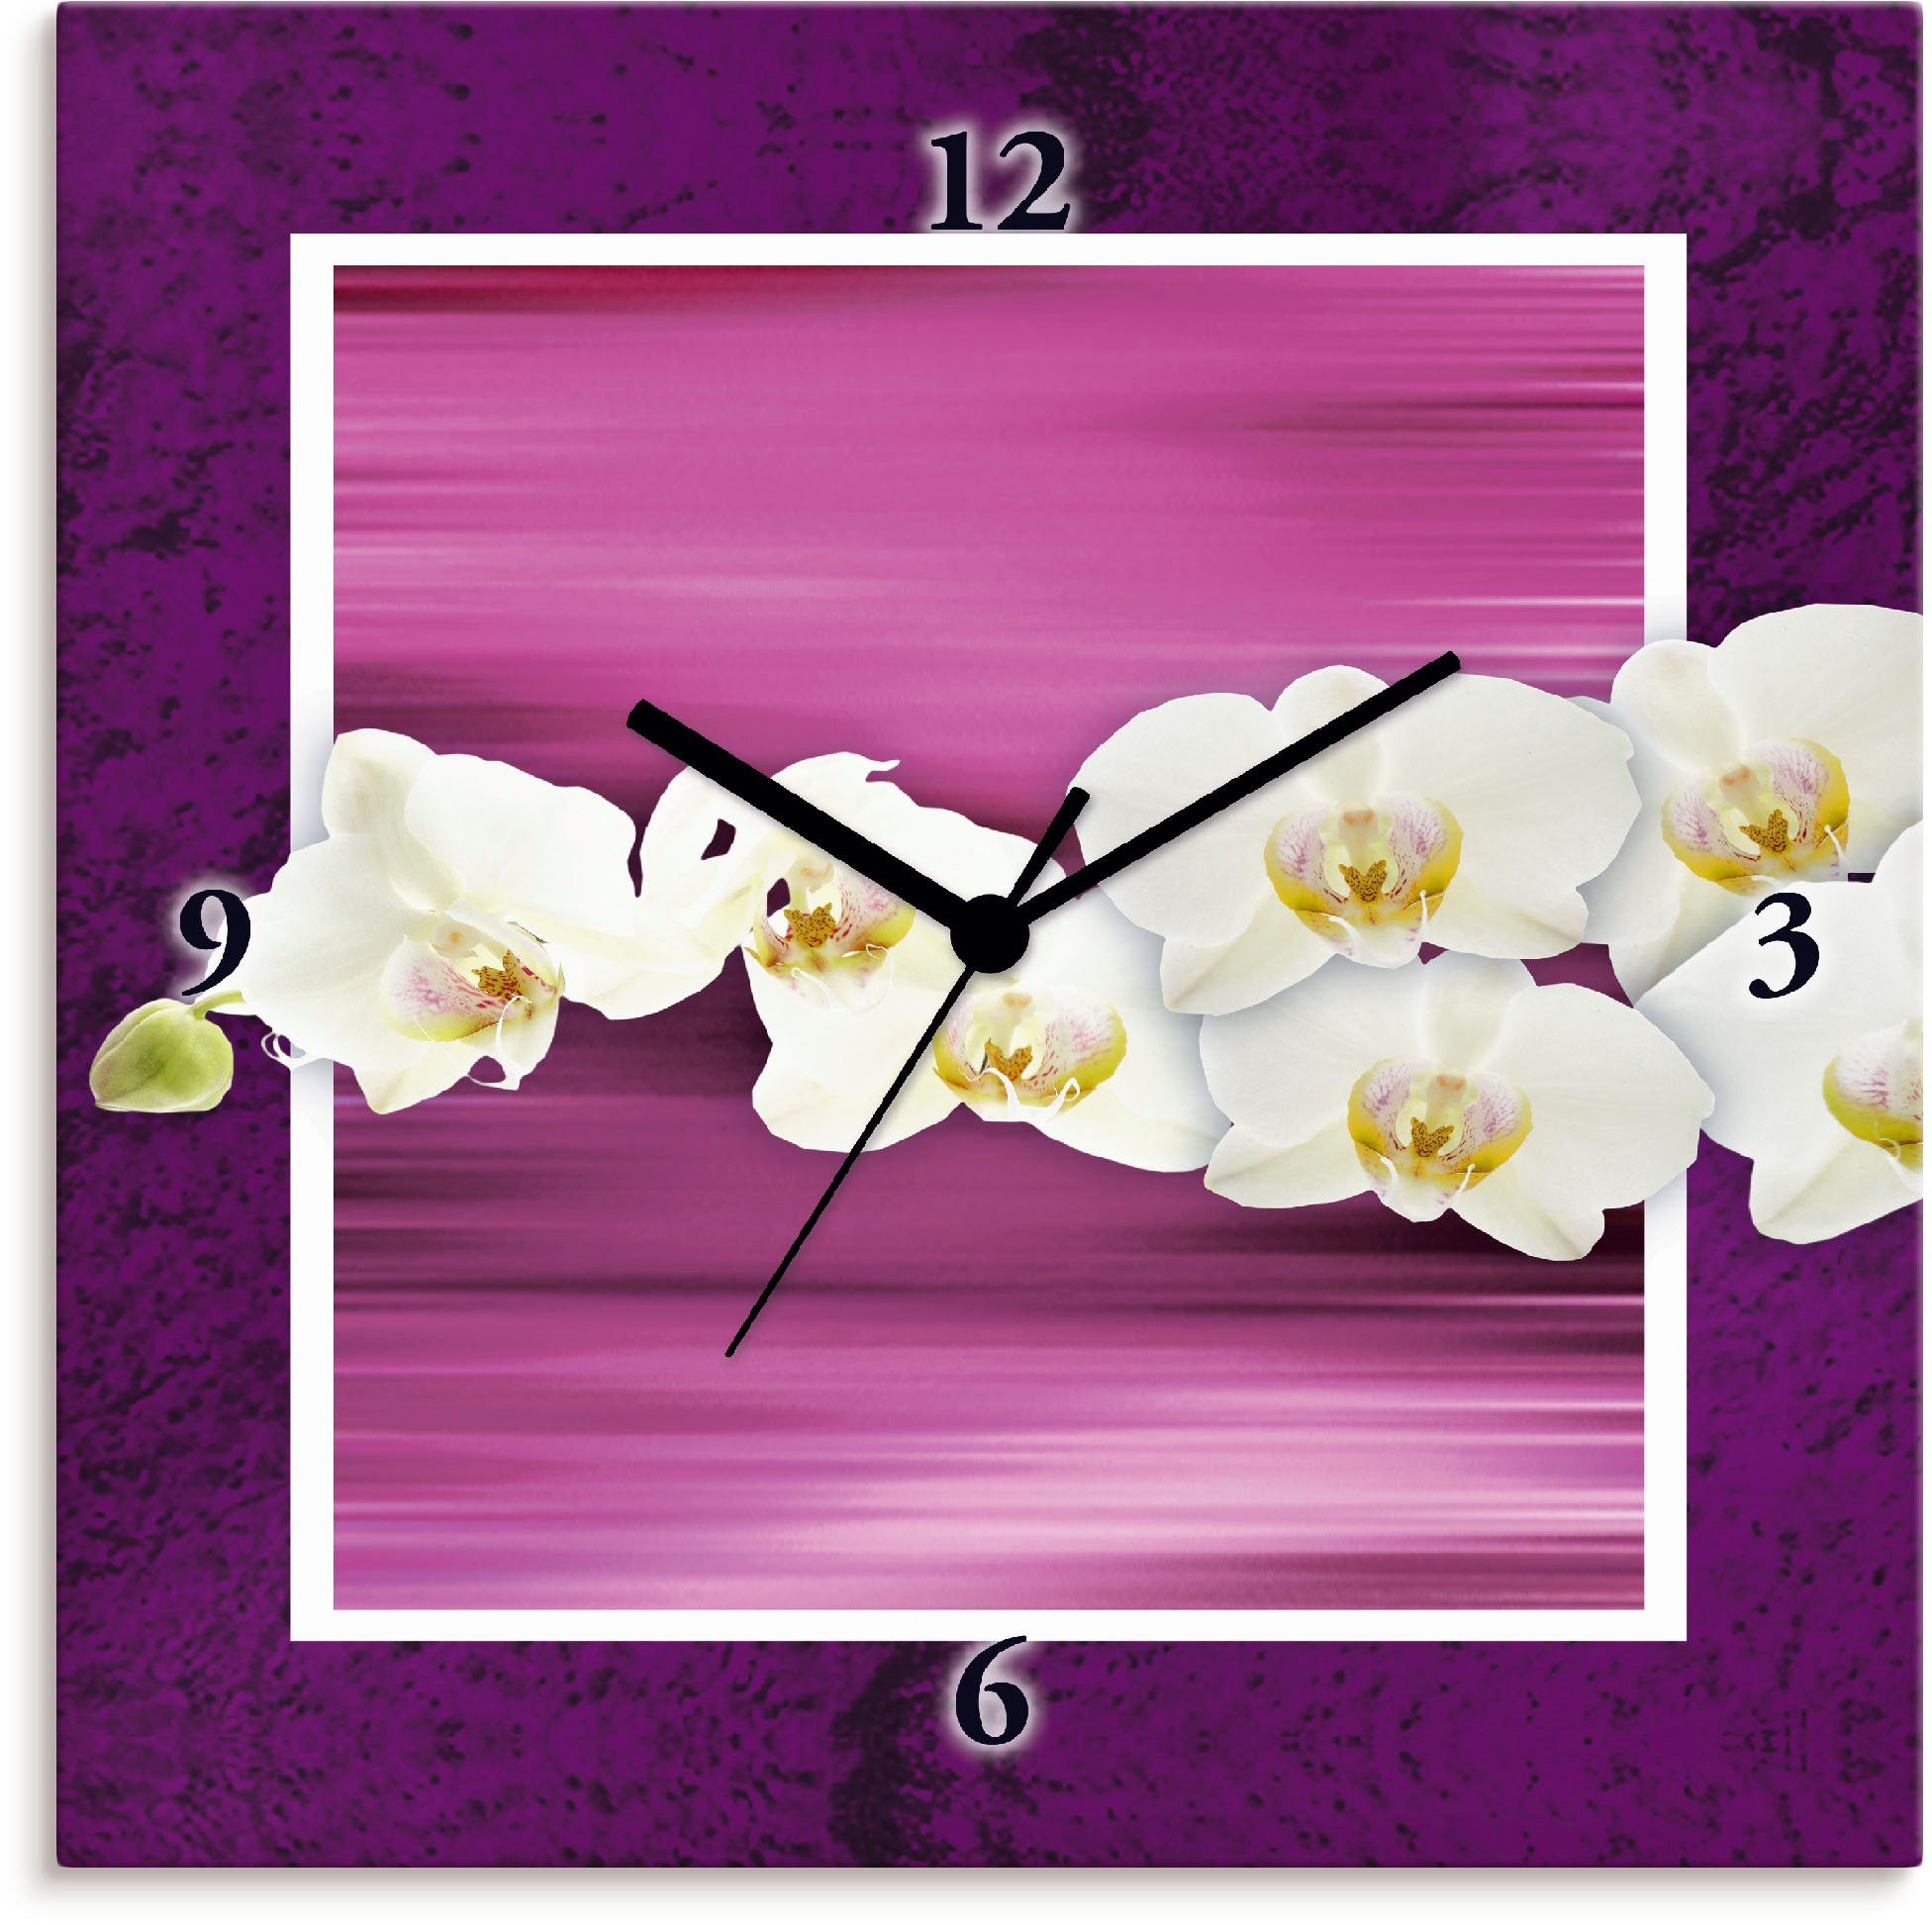 Artland Wanduhr Funkuhrwerk, Orchideen (wahlweise oder - ohne Tickgeräusche) mit violett lautlos Quarz